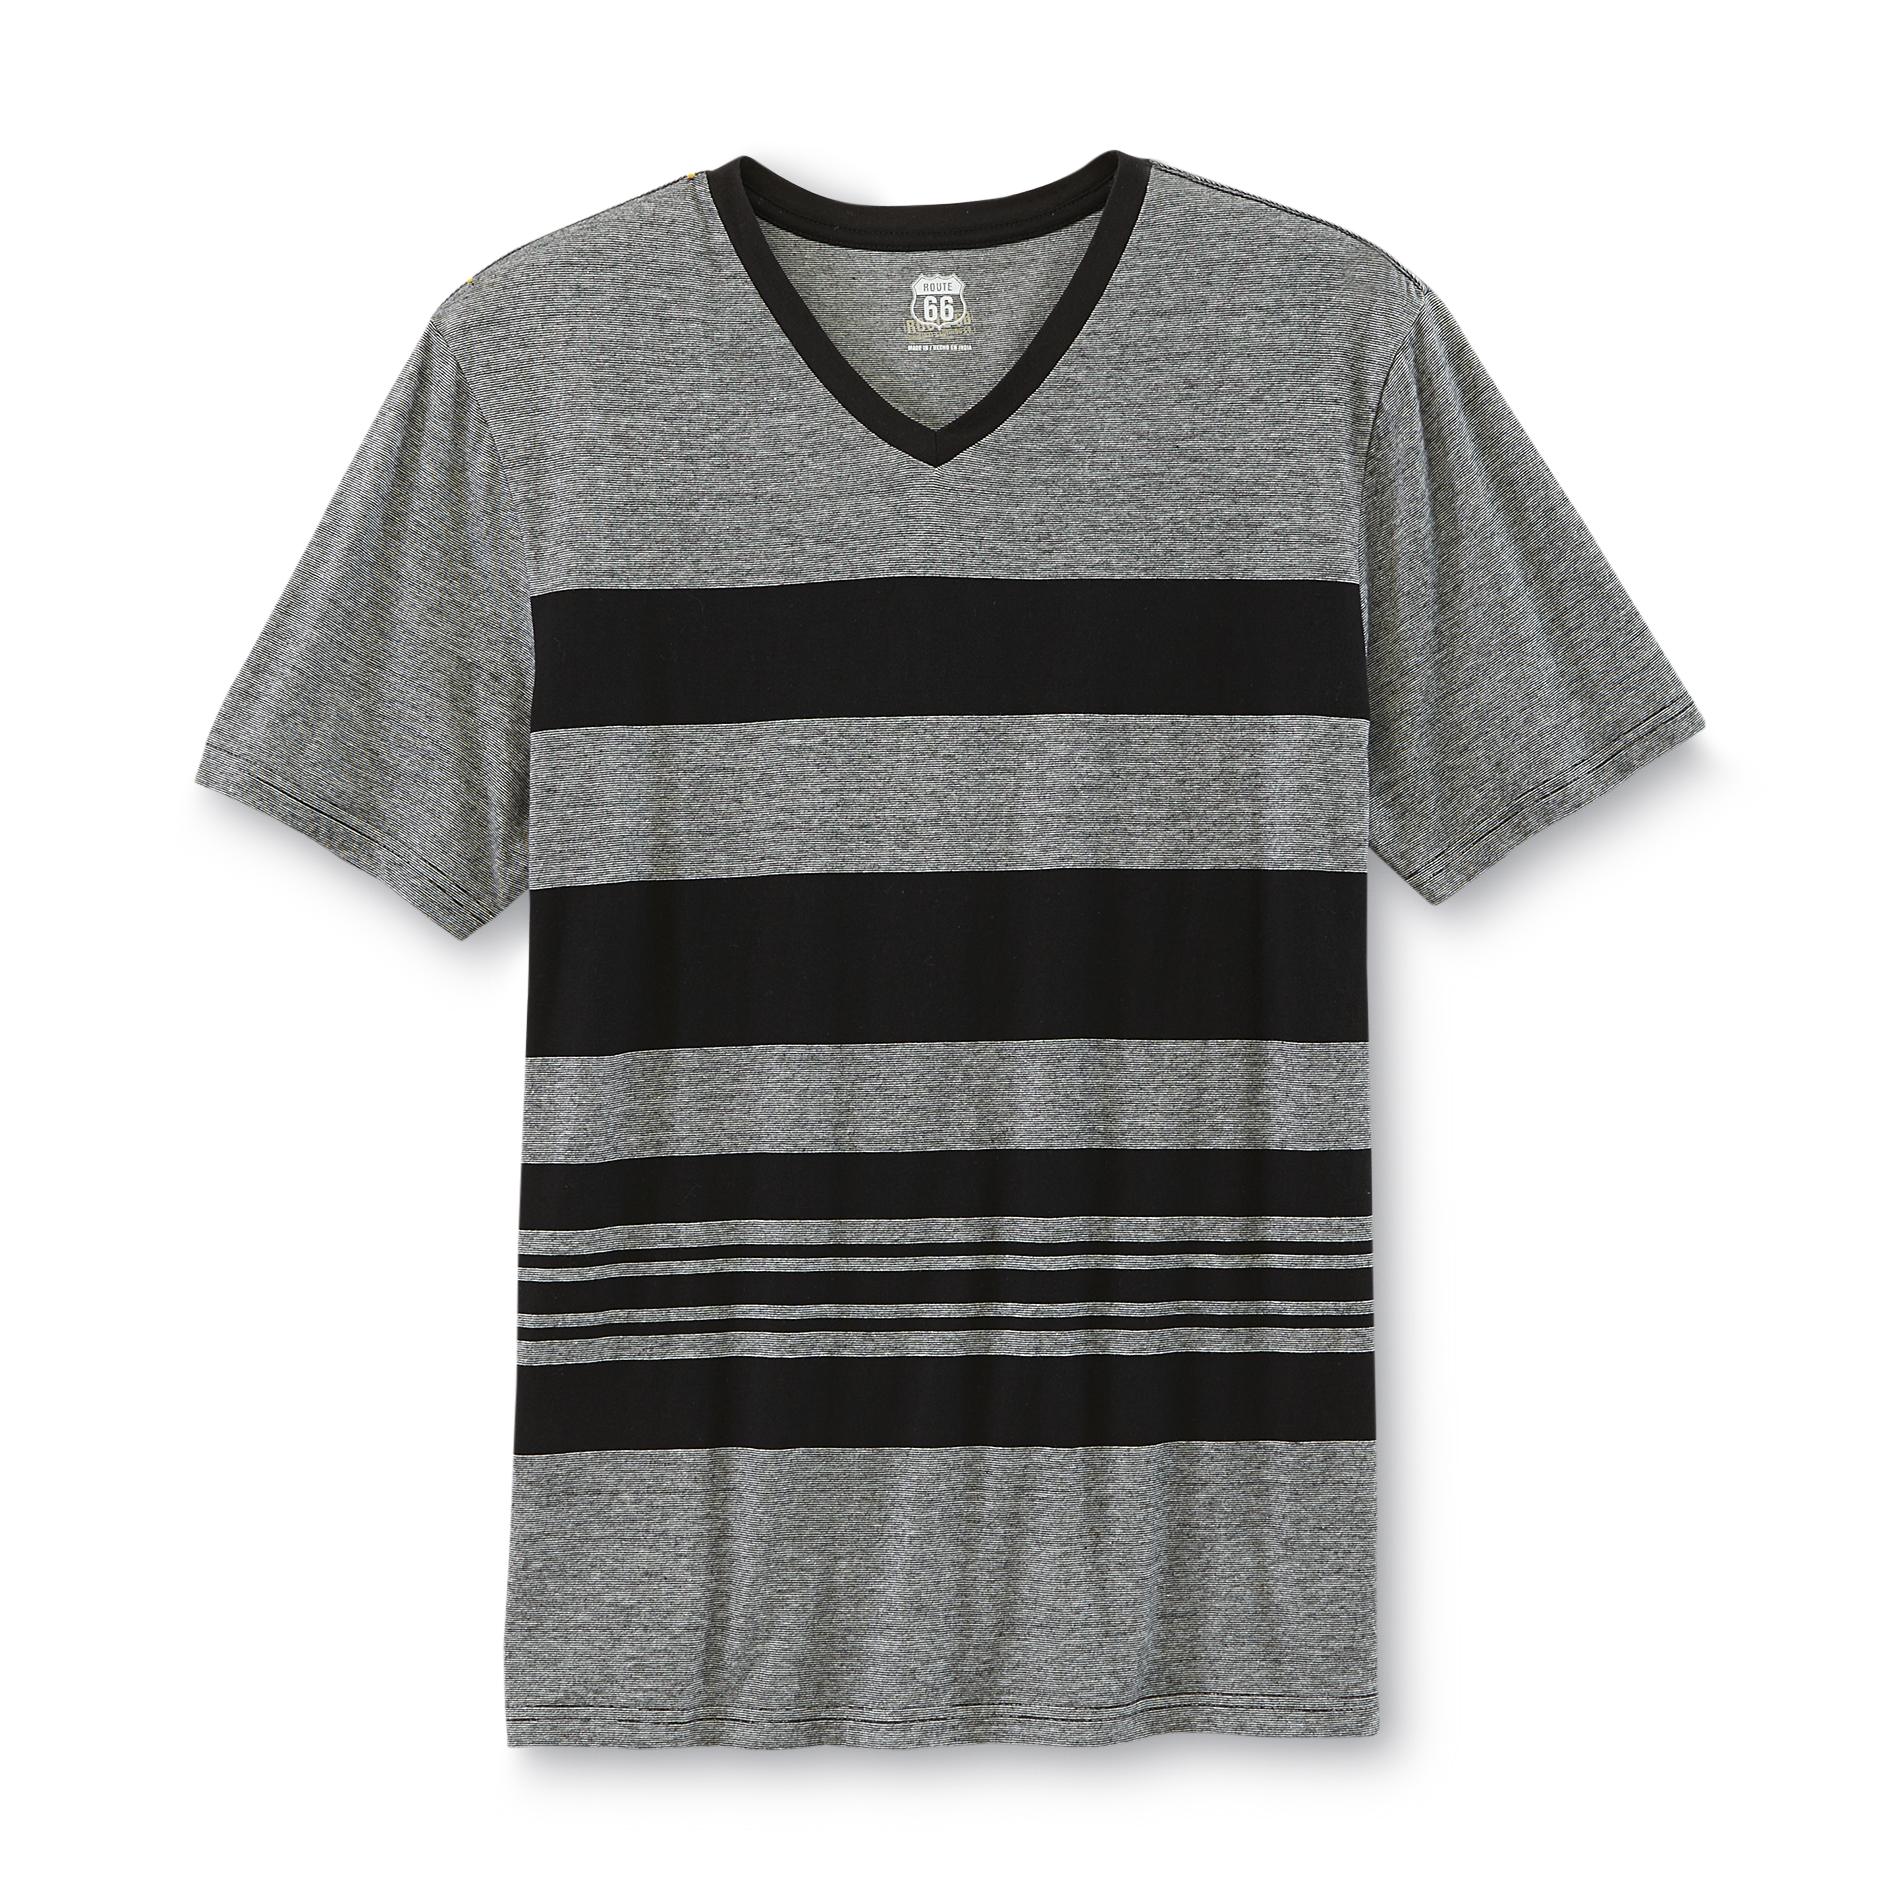 Route 66 Men's V-Neck T-Shirt - Micro Striped